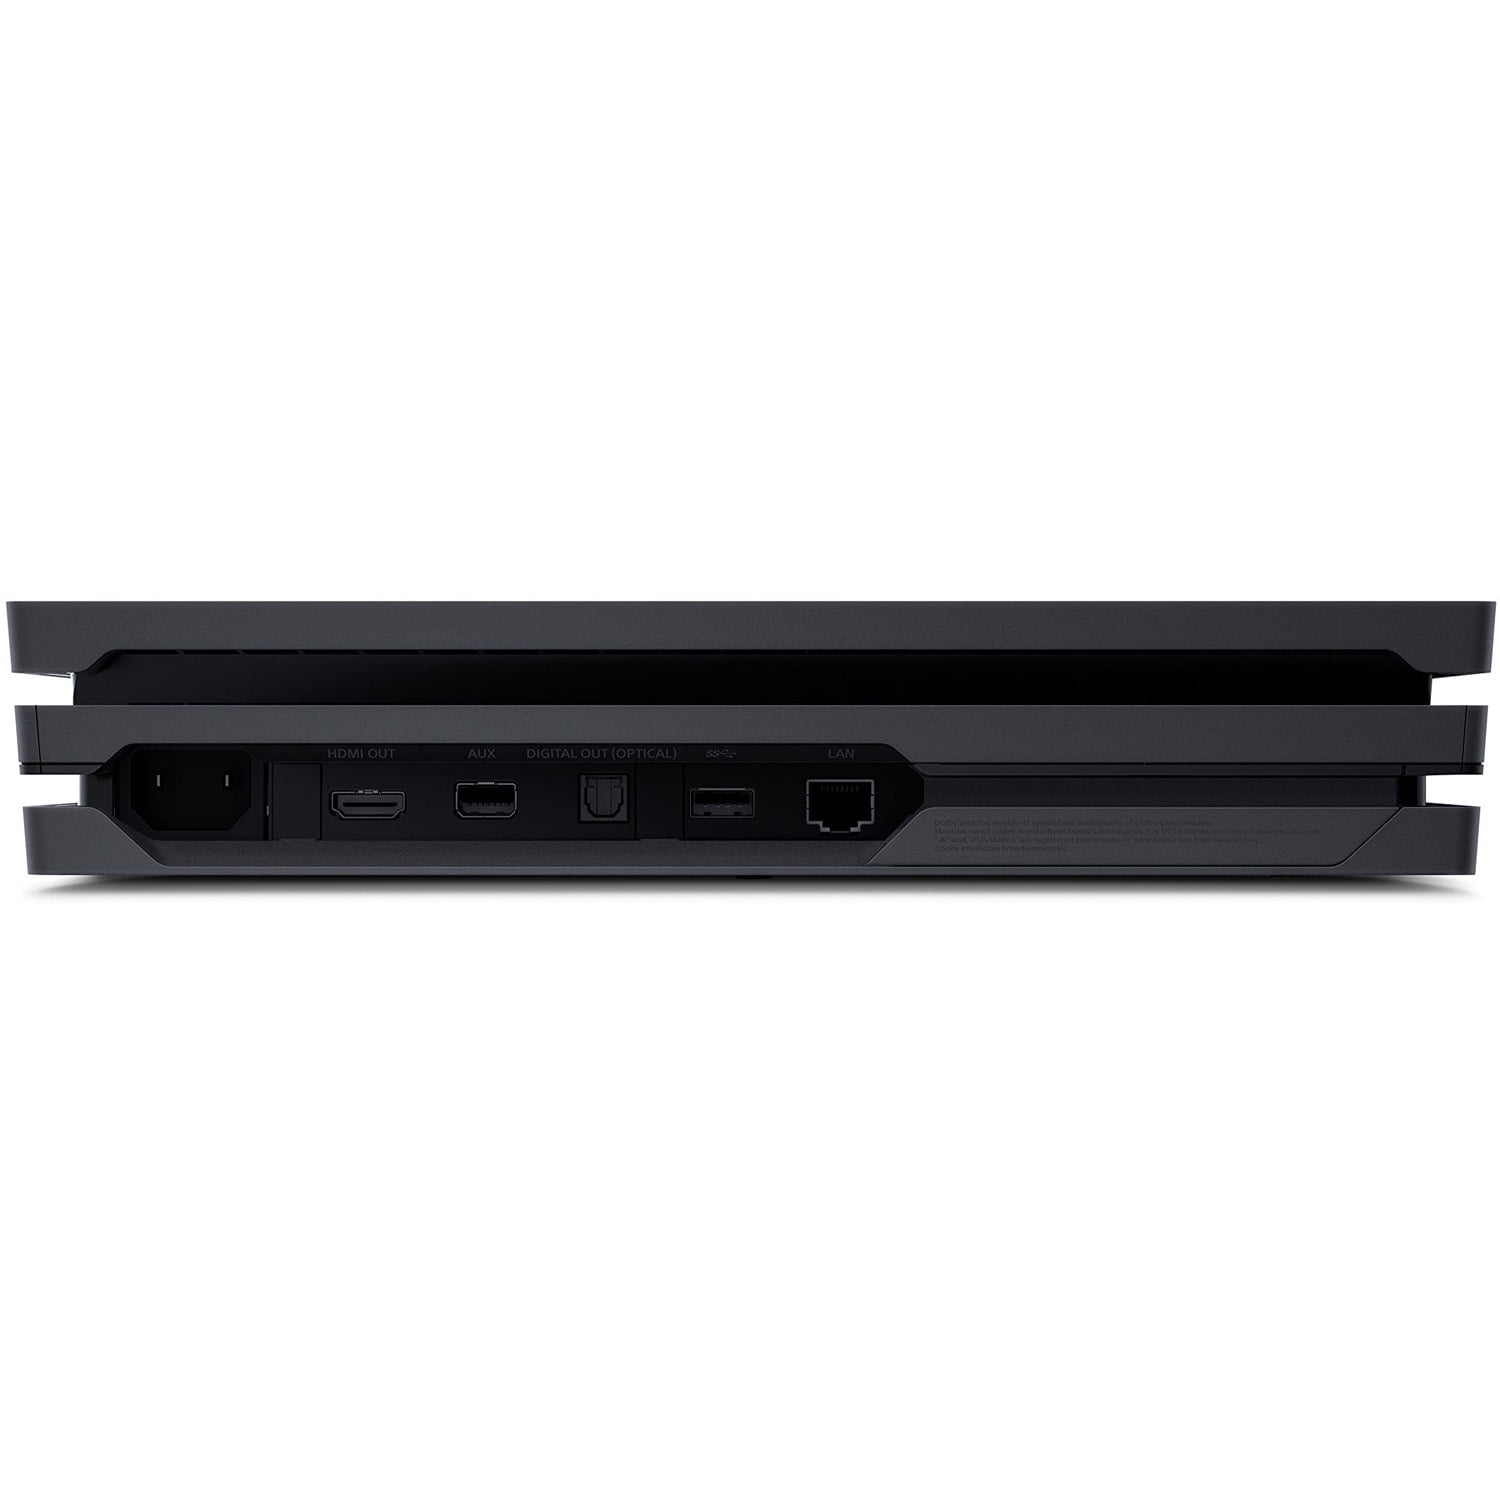 Sony PlayStation 4 Pro 1TB Gaming Console, Black, CUH-7115 